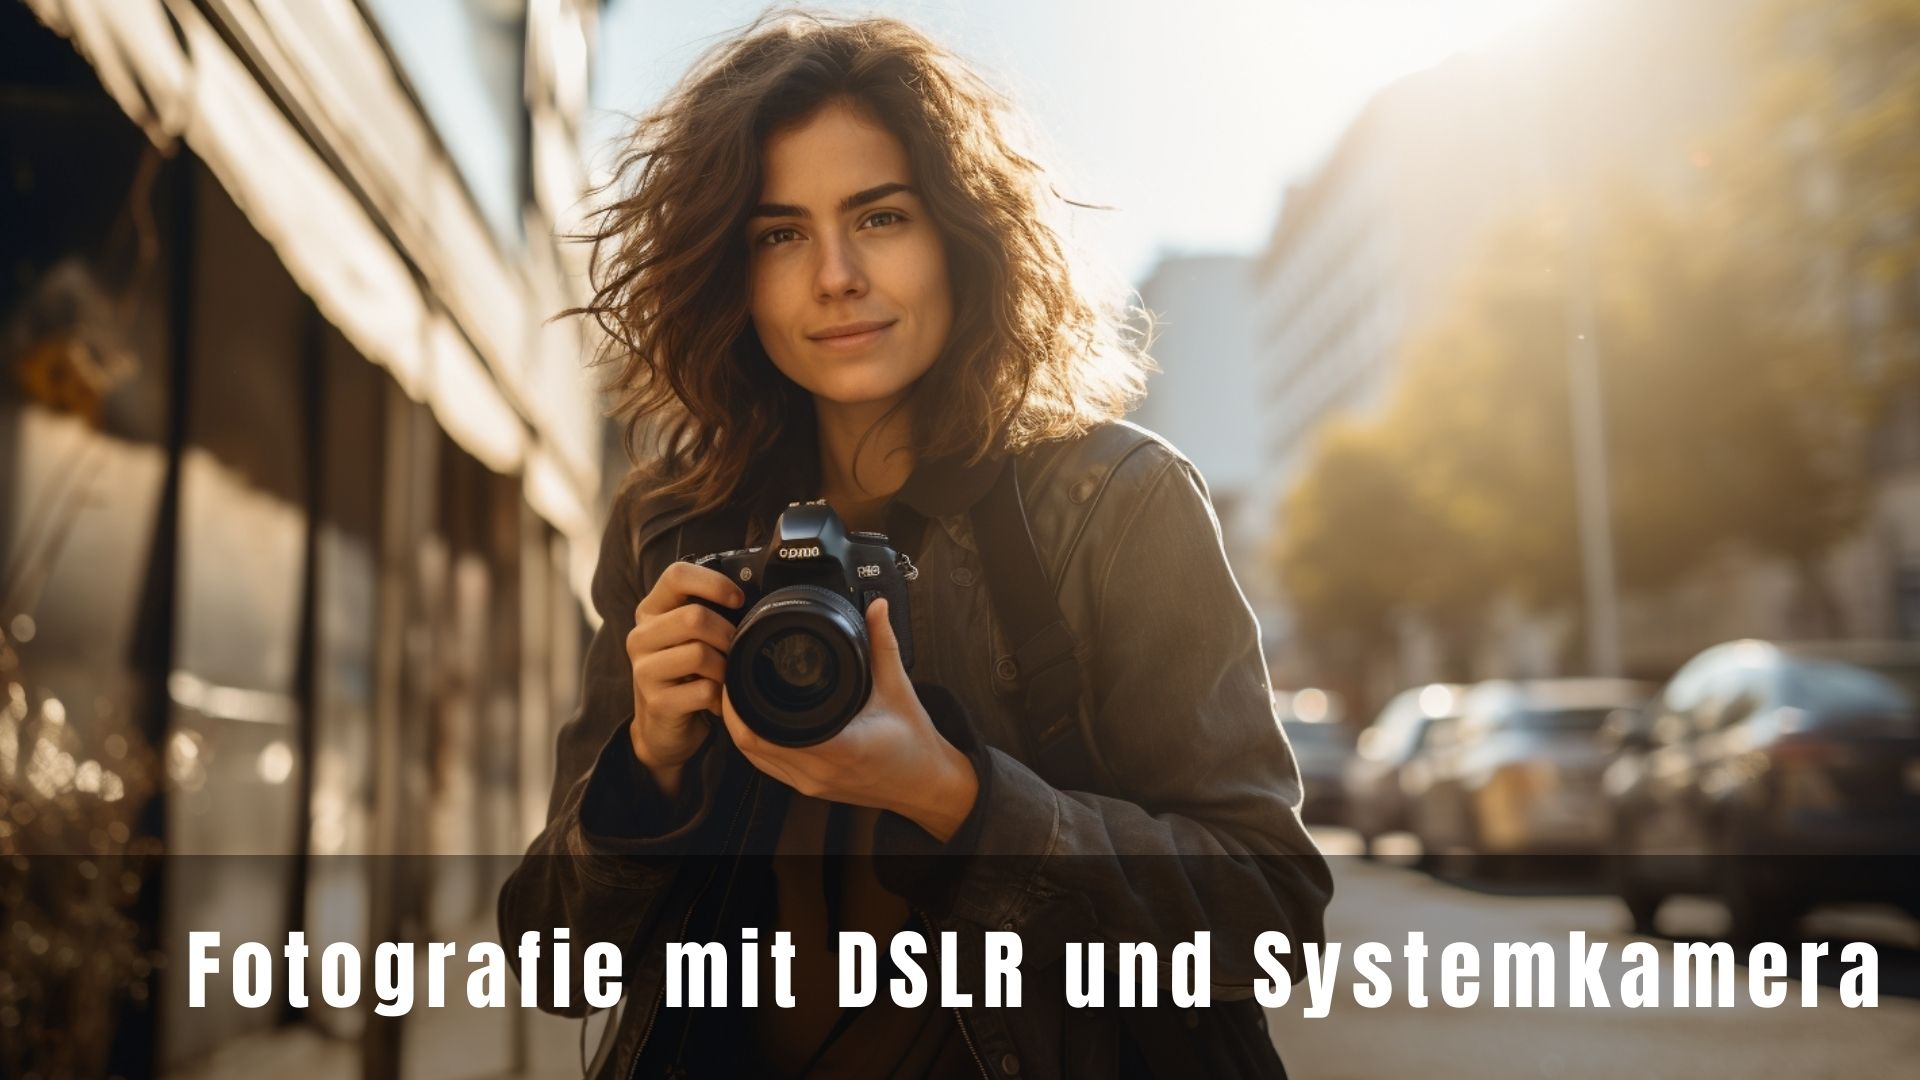 Fotografie mit DSLR und Systemkamera | E-Training kompakt